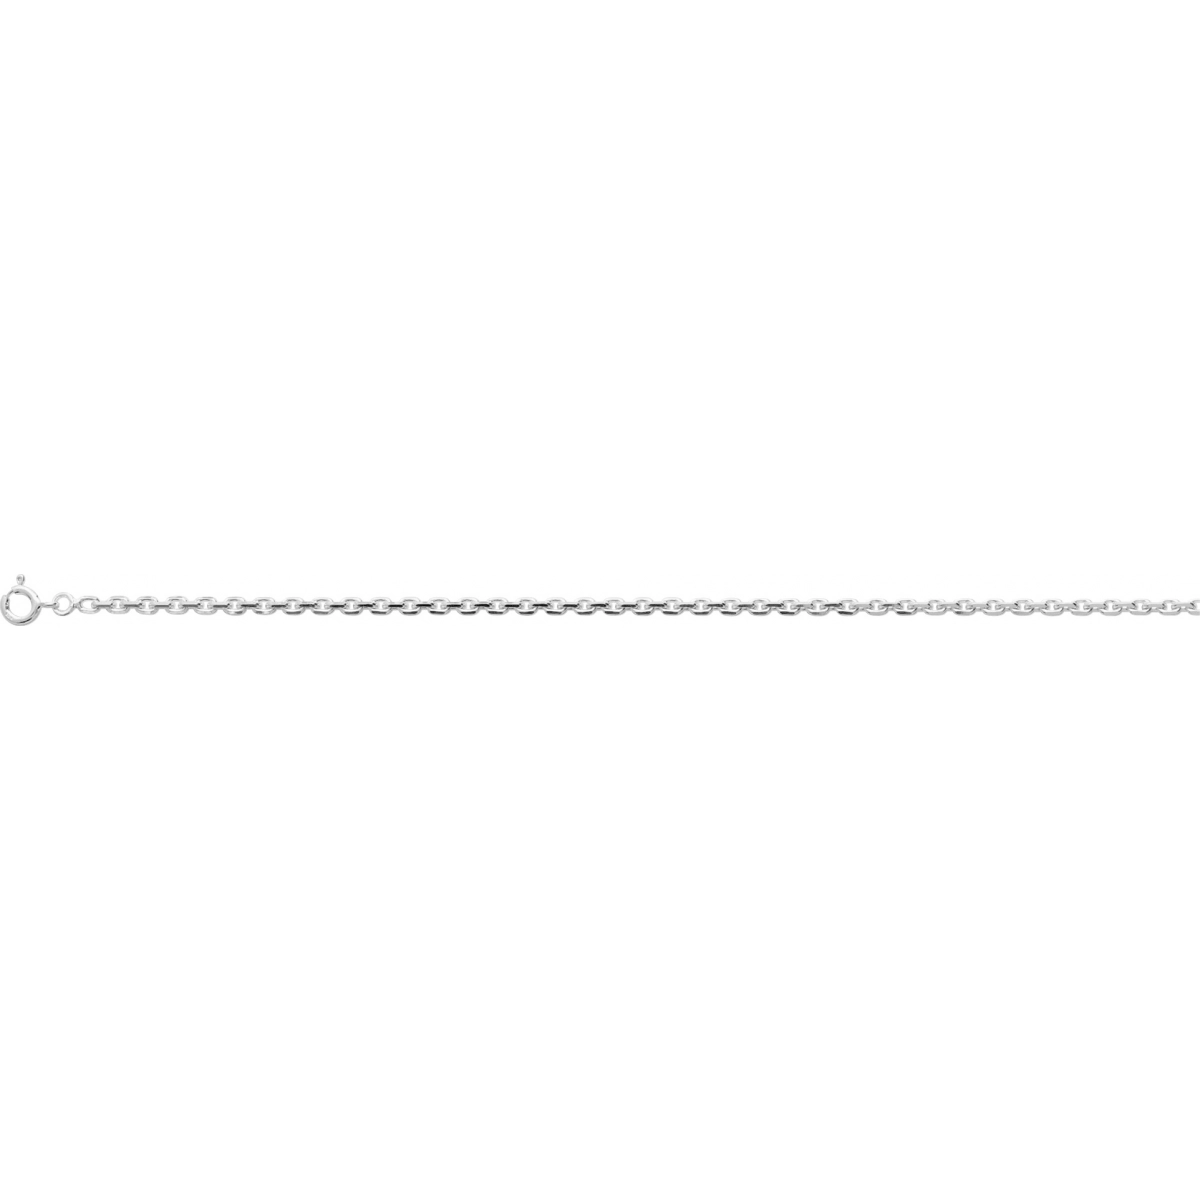 Necklace 'link chain' rh925 Silver - Size: 70  Lua Blanca  301478C.70